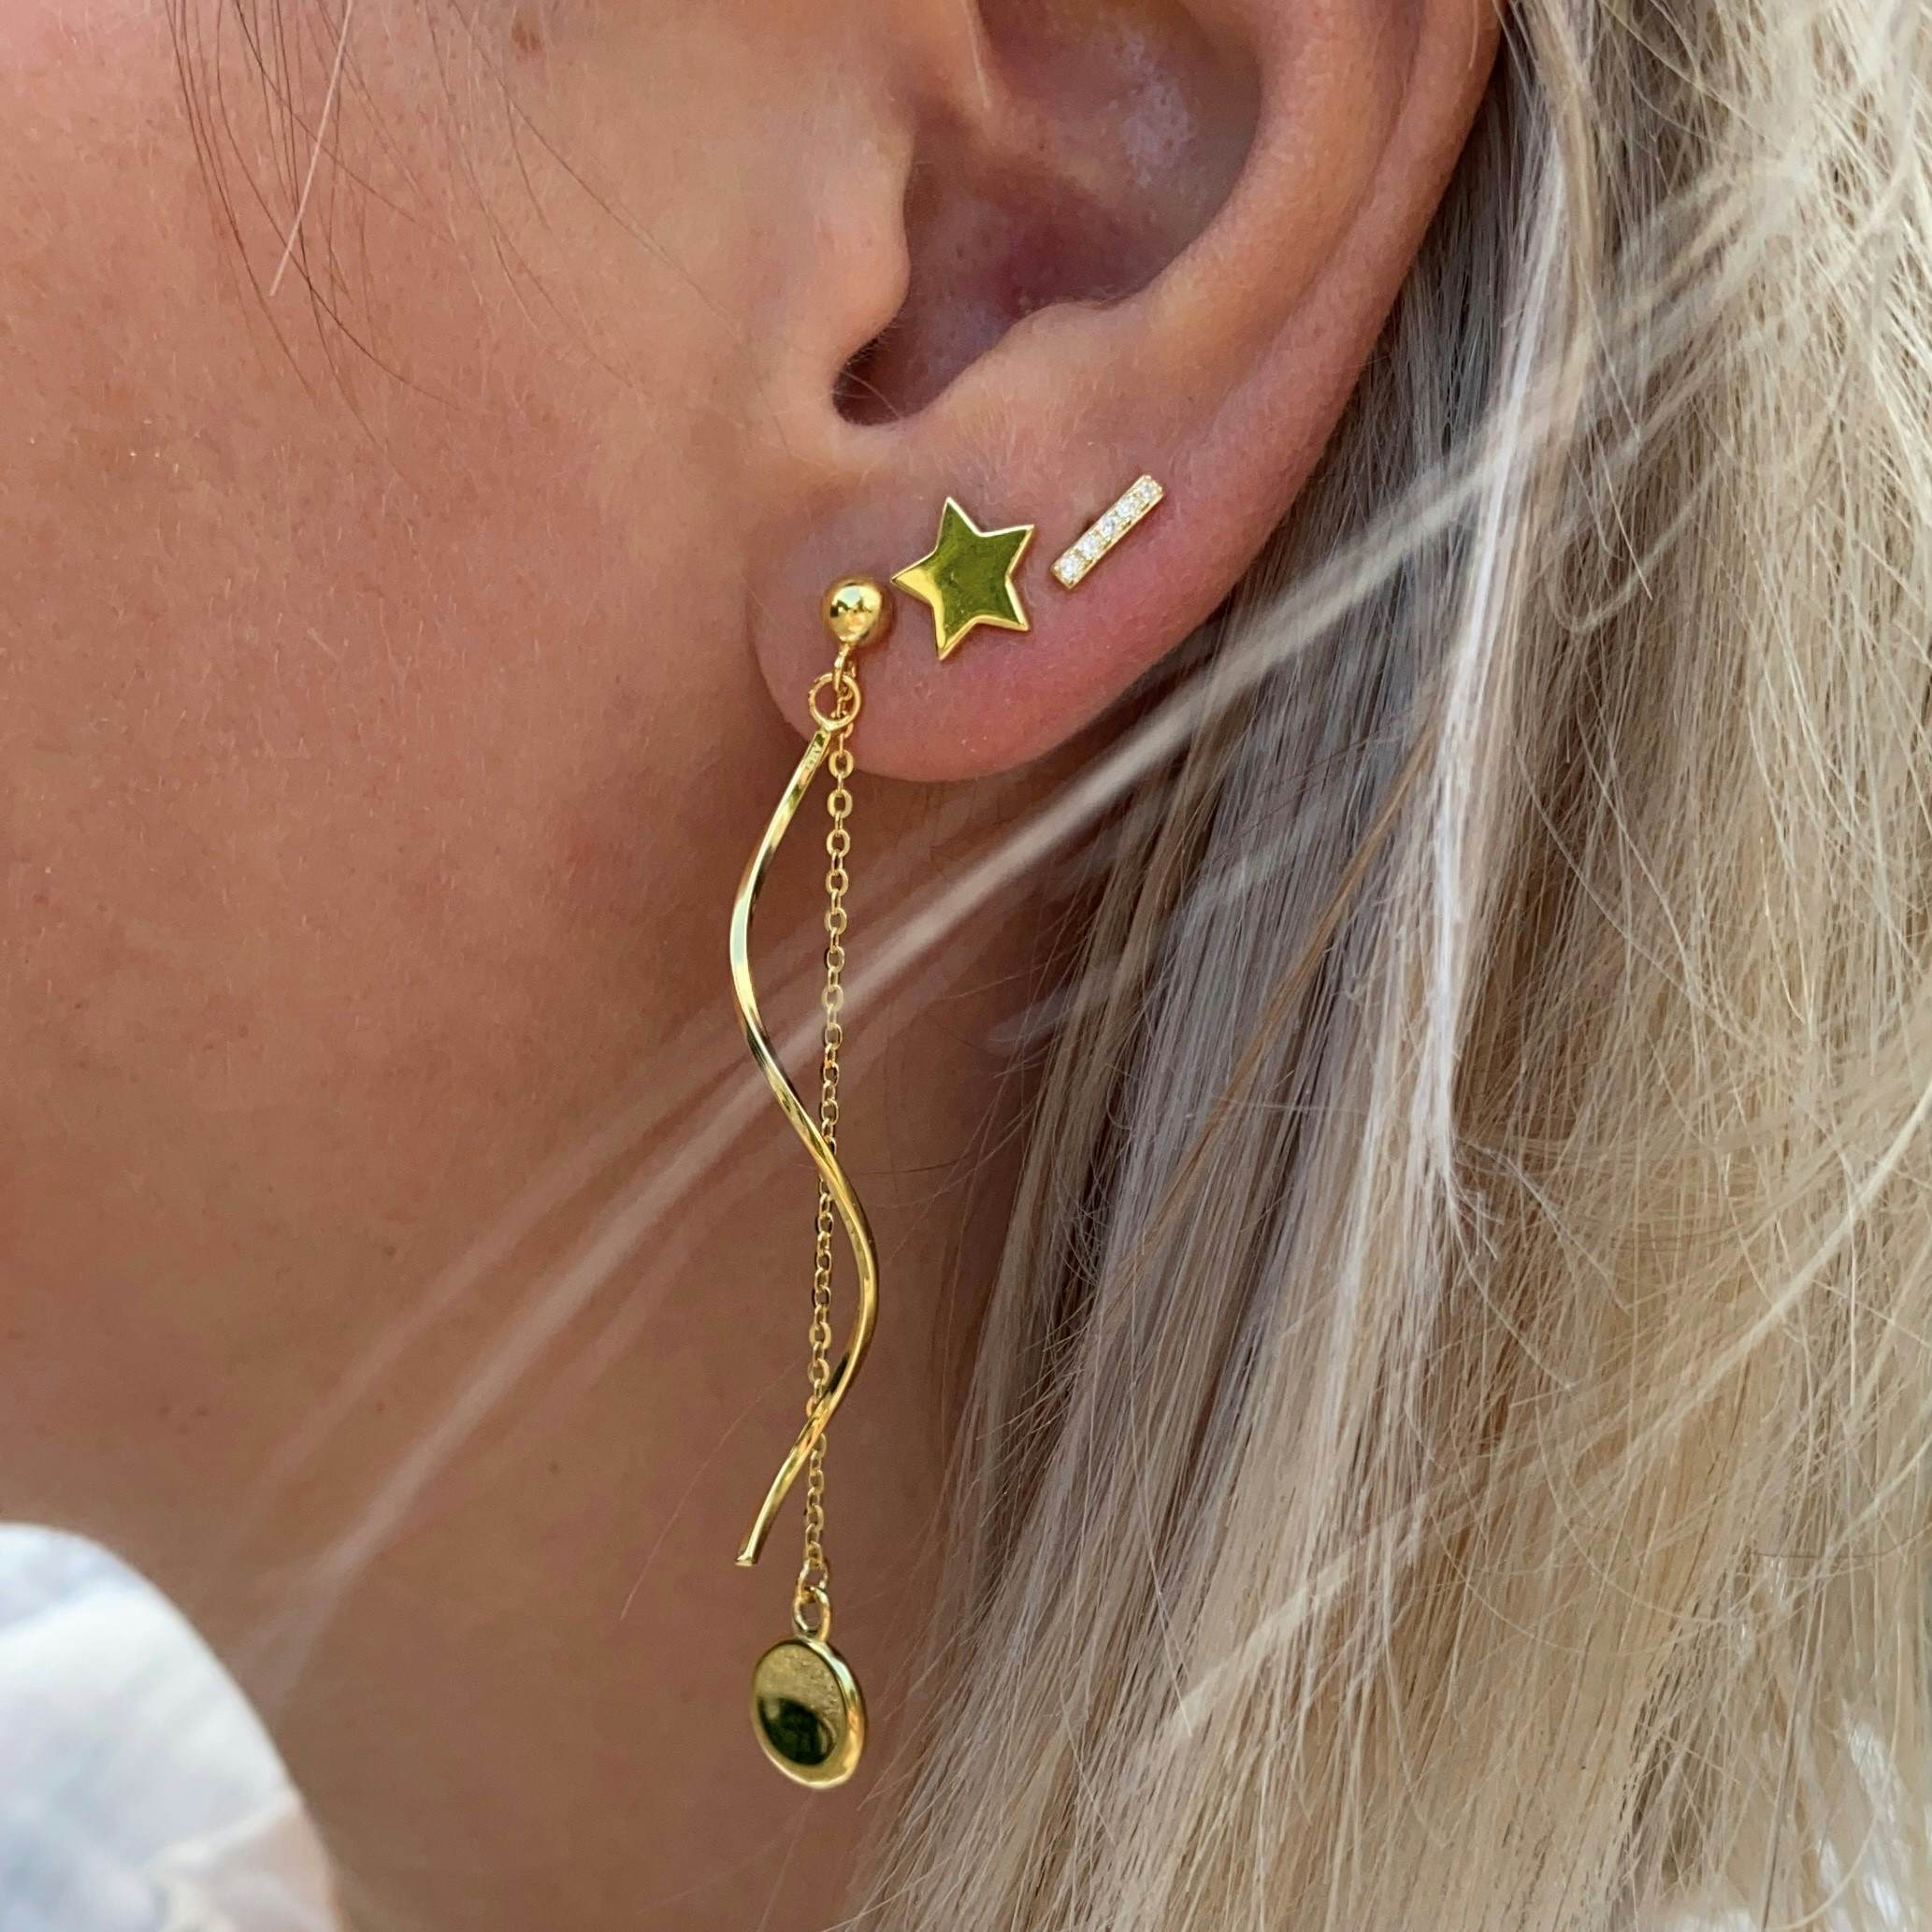 Anne earrings from A-Hjort in Goldplated-Silver Sterling 925